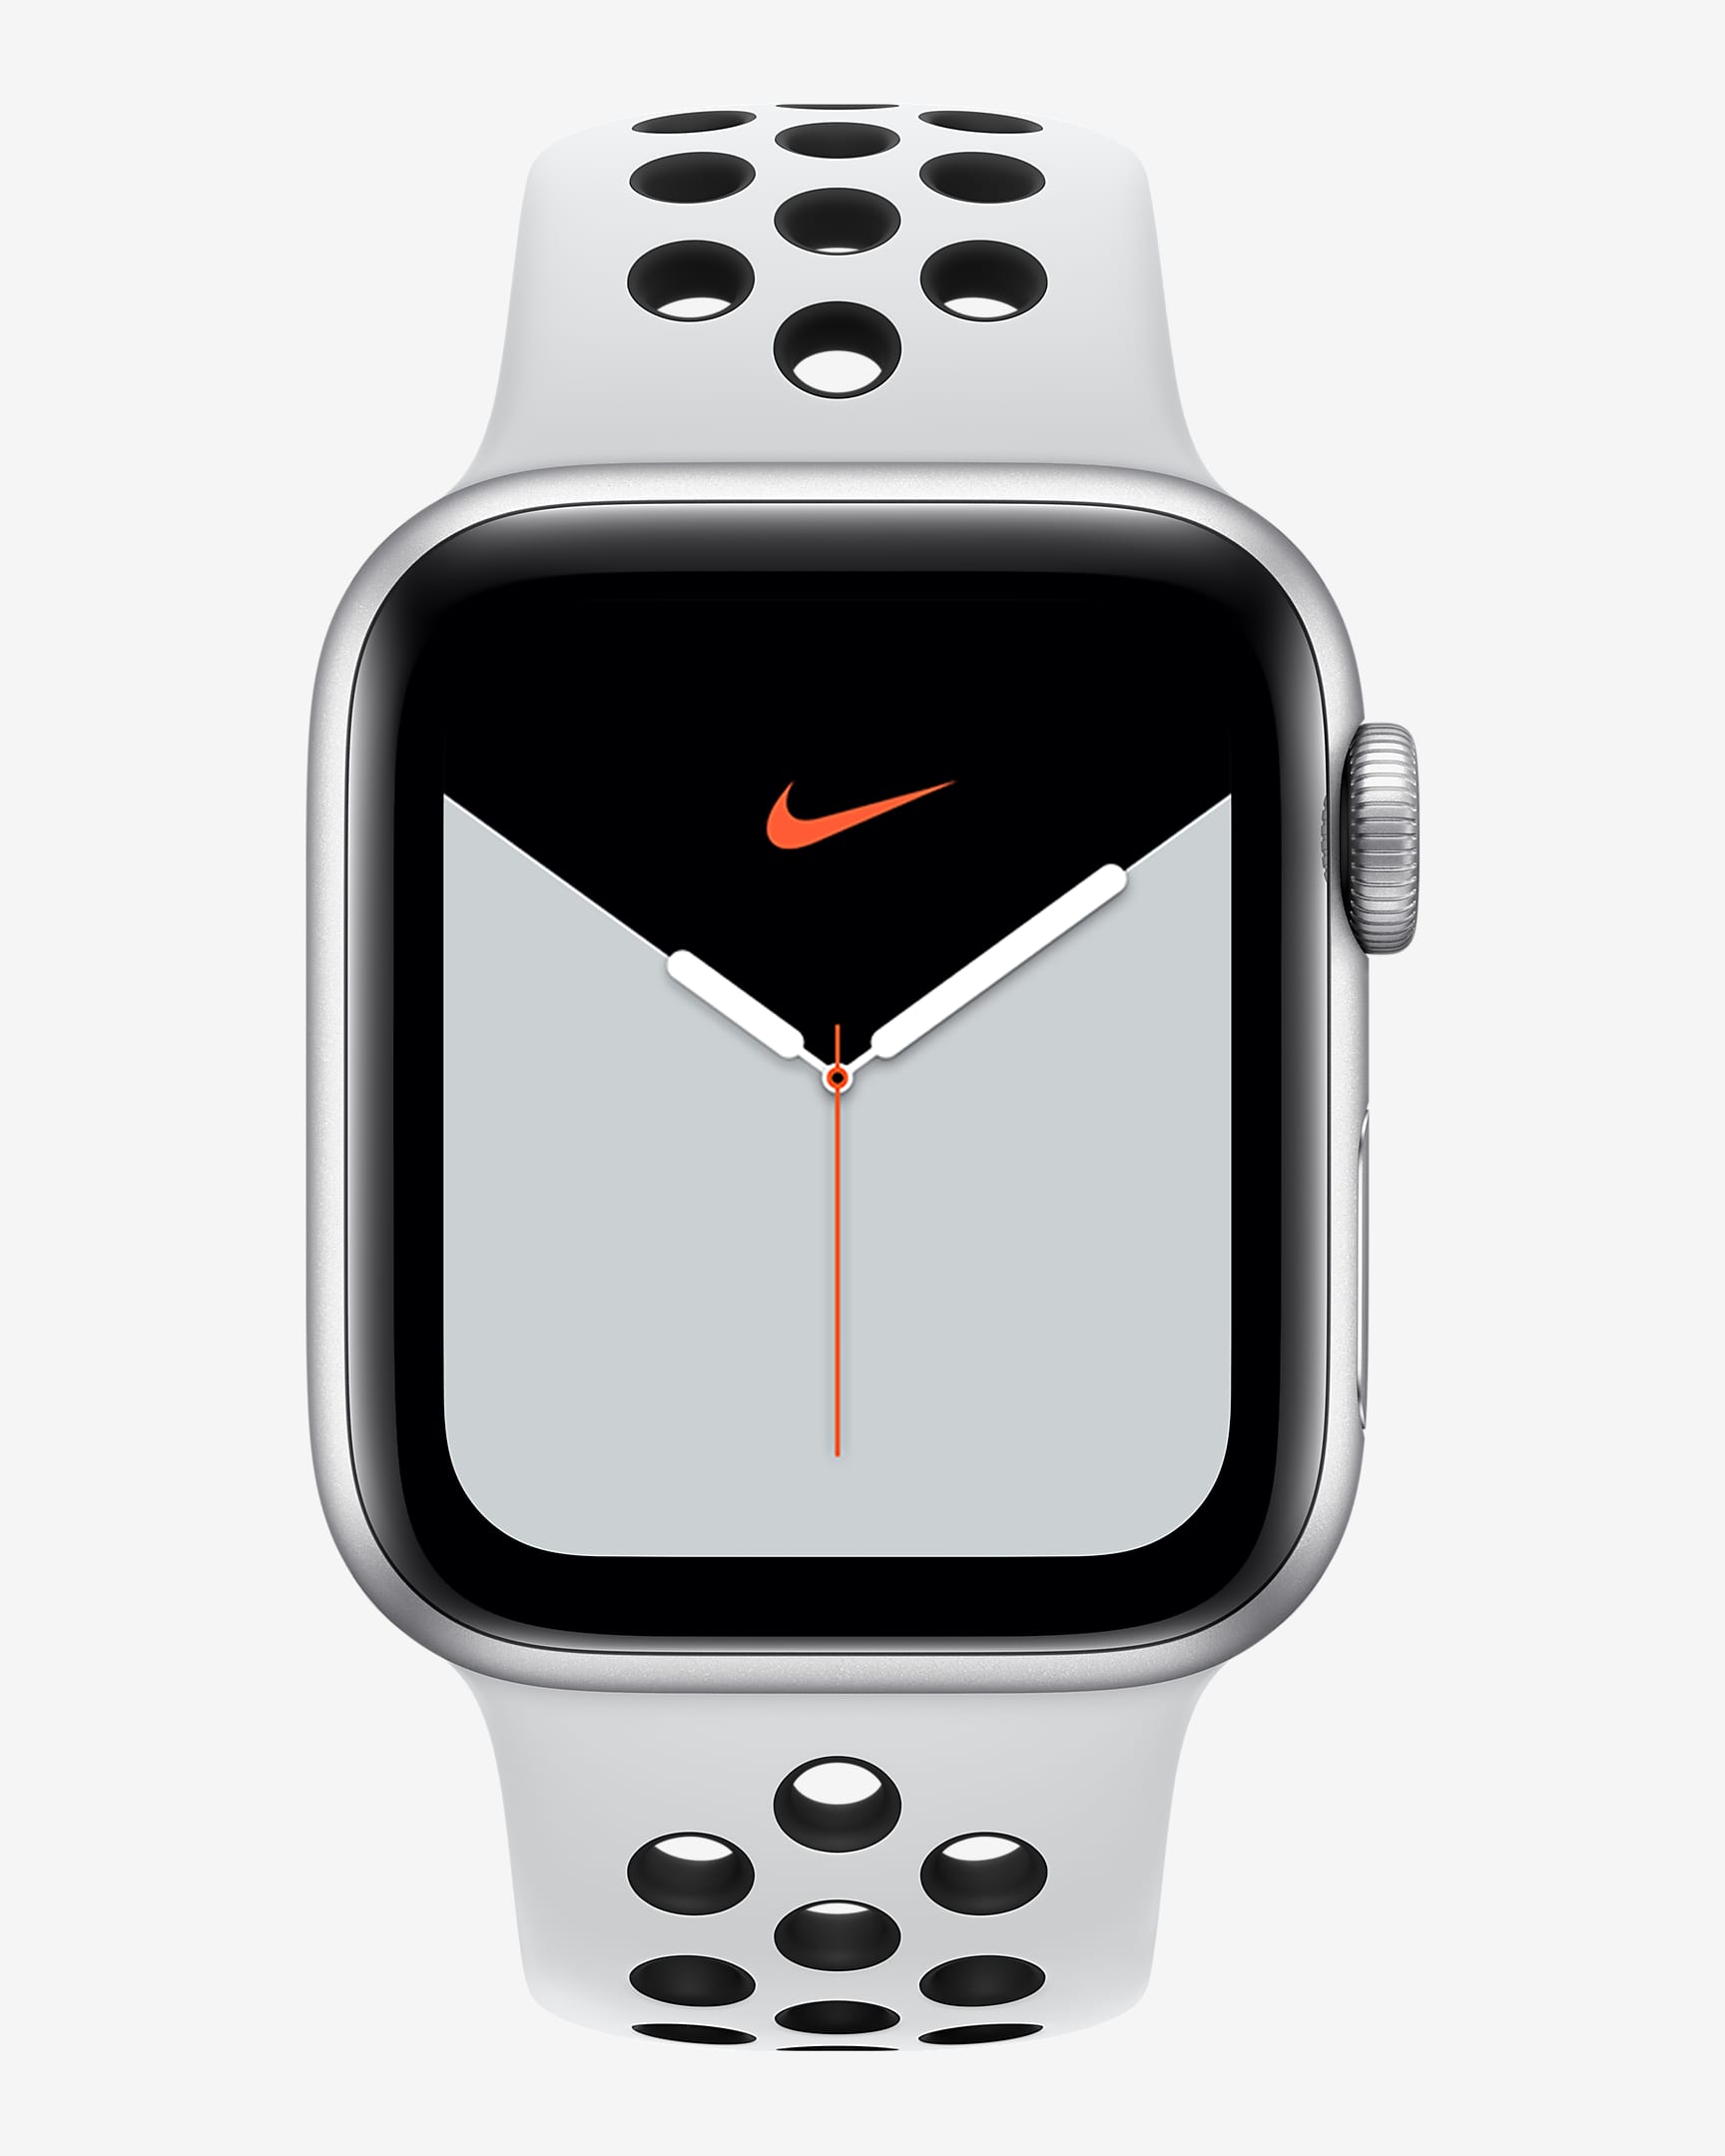 Бесплатная заставка на смарт часы. Эпл вотч 7 найк. Эпл вотч 5 найк 44мм. Apple watch Series 5 44mm Nike. Apple watch 5 44 mm Nike.